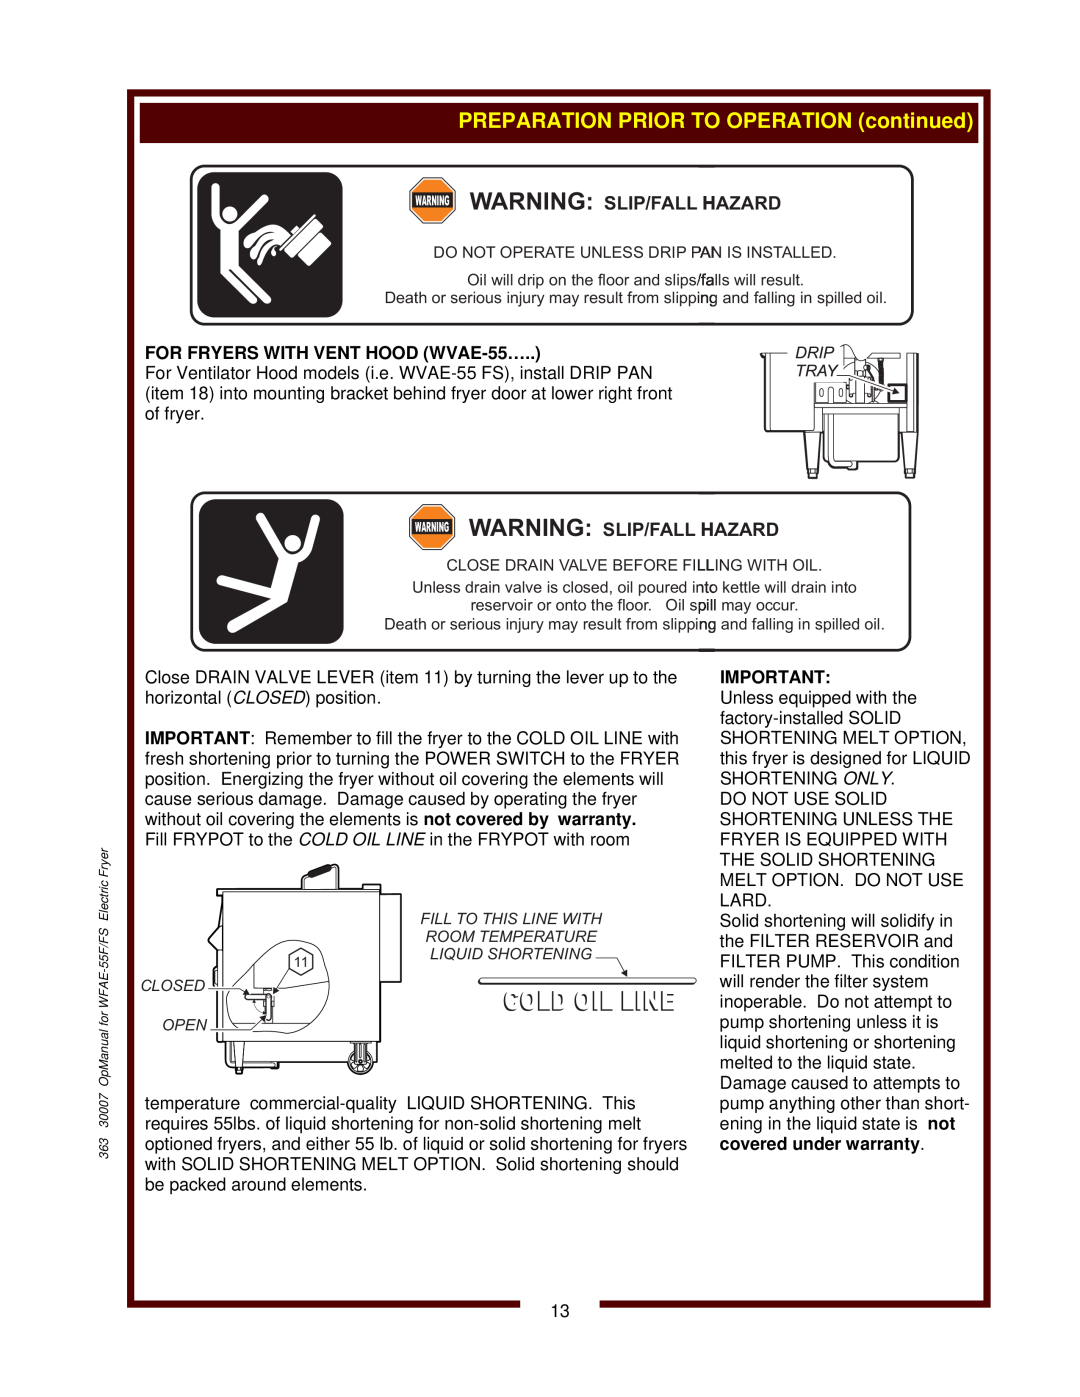 Wells WFAE-55F operation manual Warning Slip/Fall Hazard, Cold Oil Line 